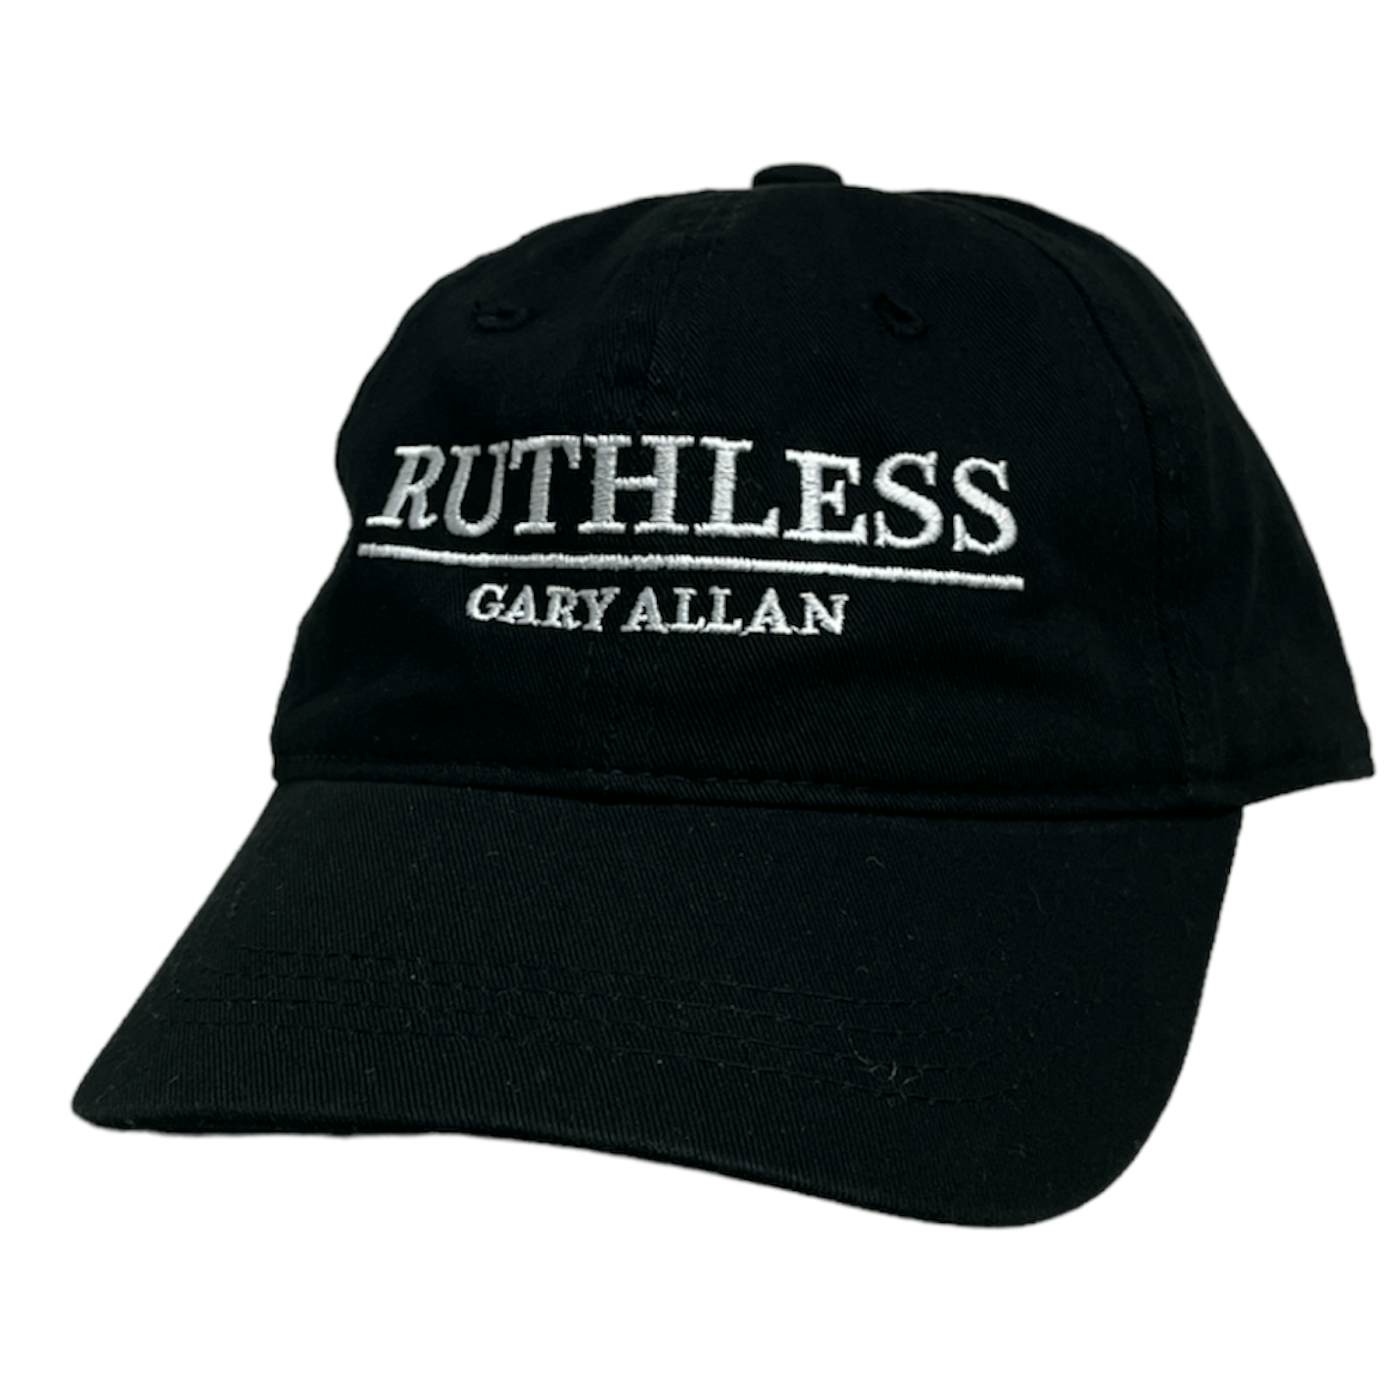 Gary Allan Ruthless Dad Hat